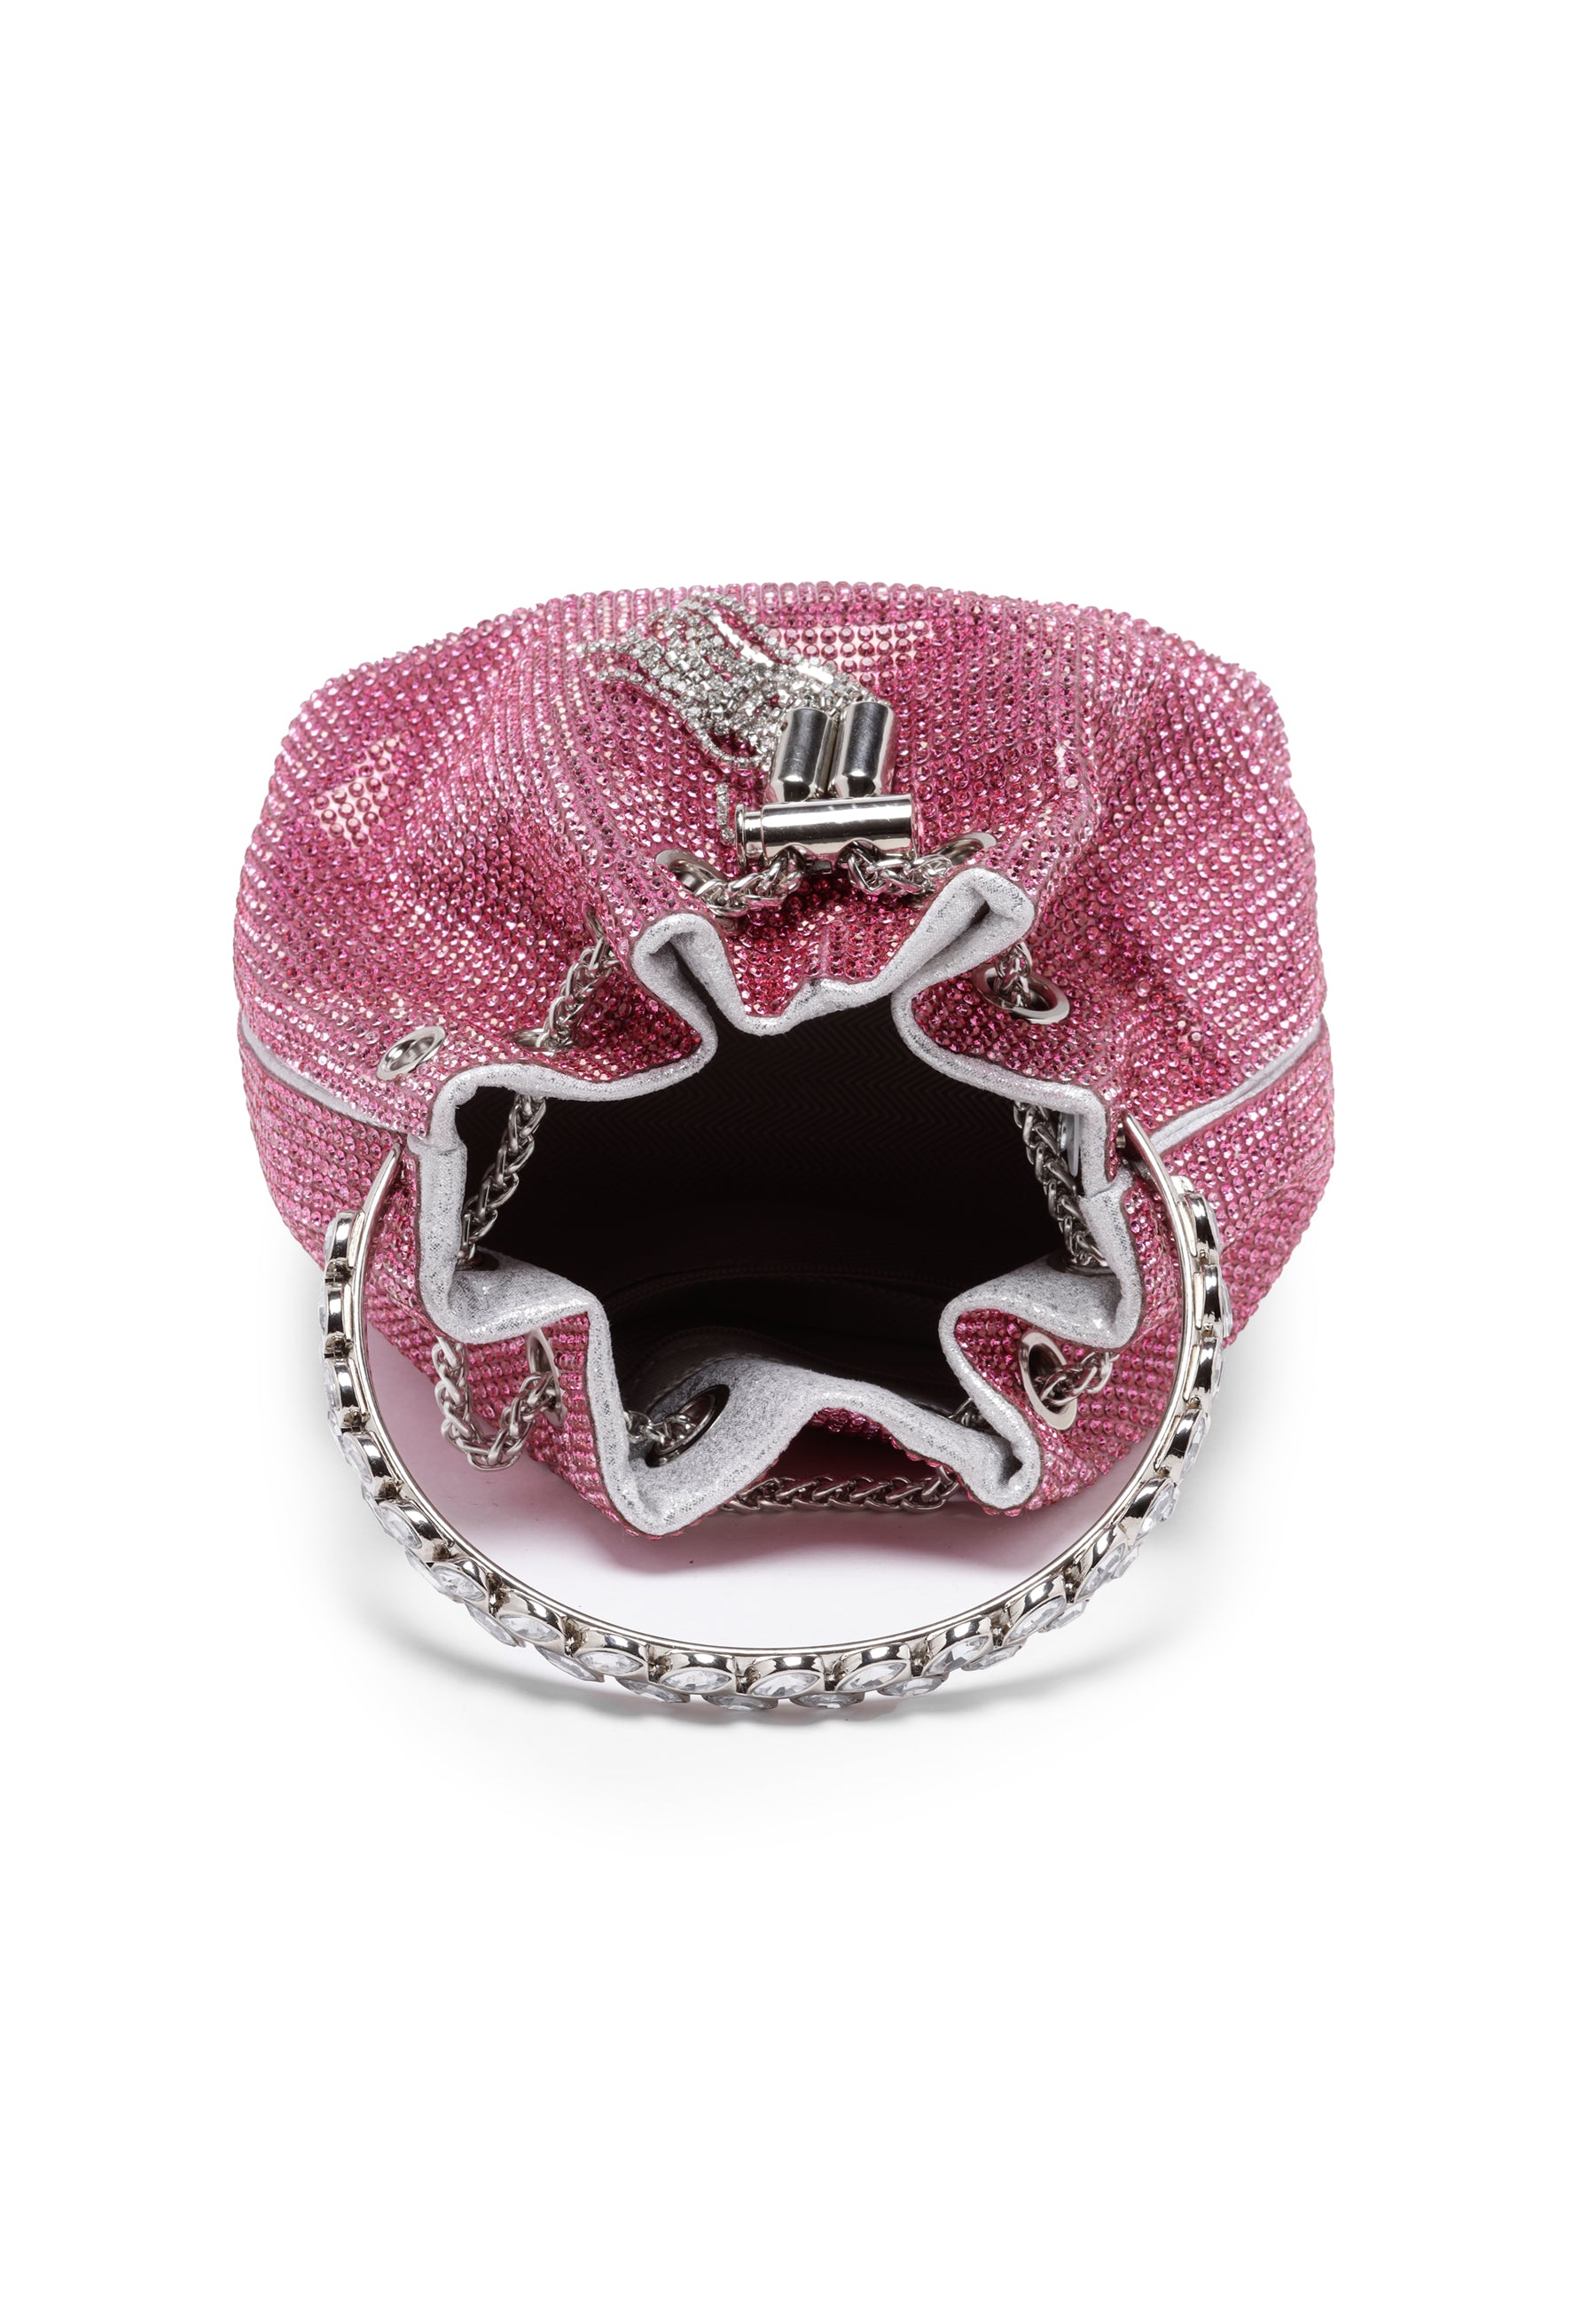 Clutch ghualainn studded Pink Crystal